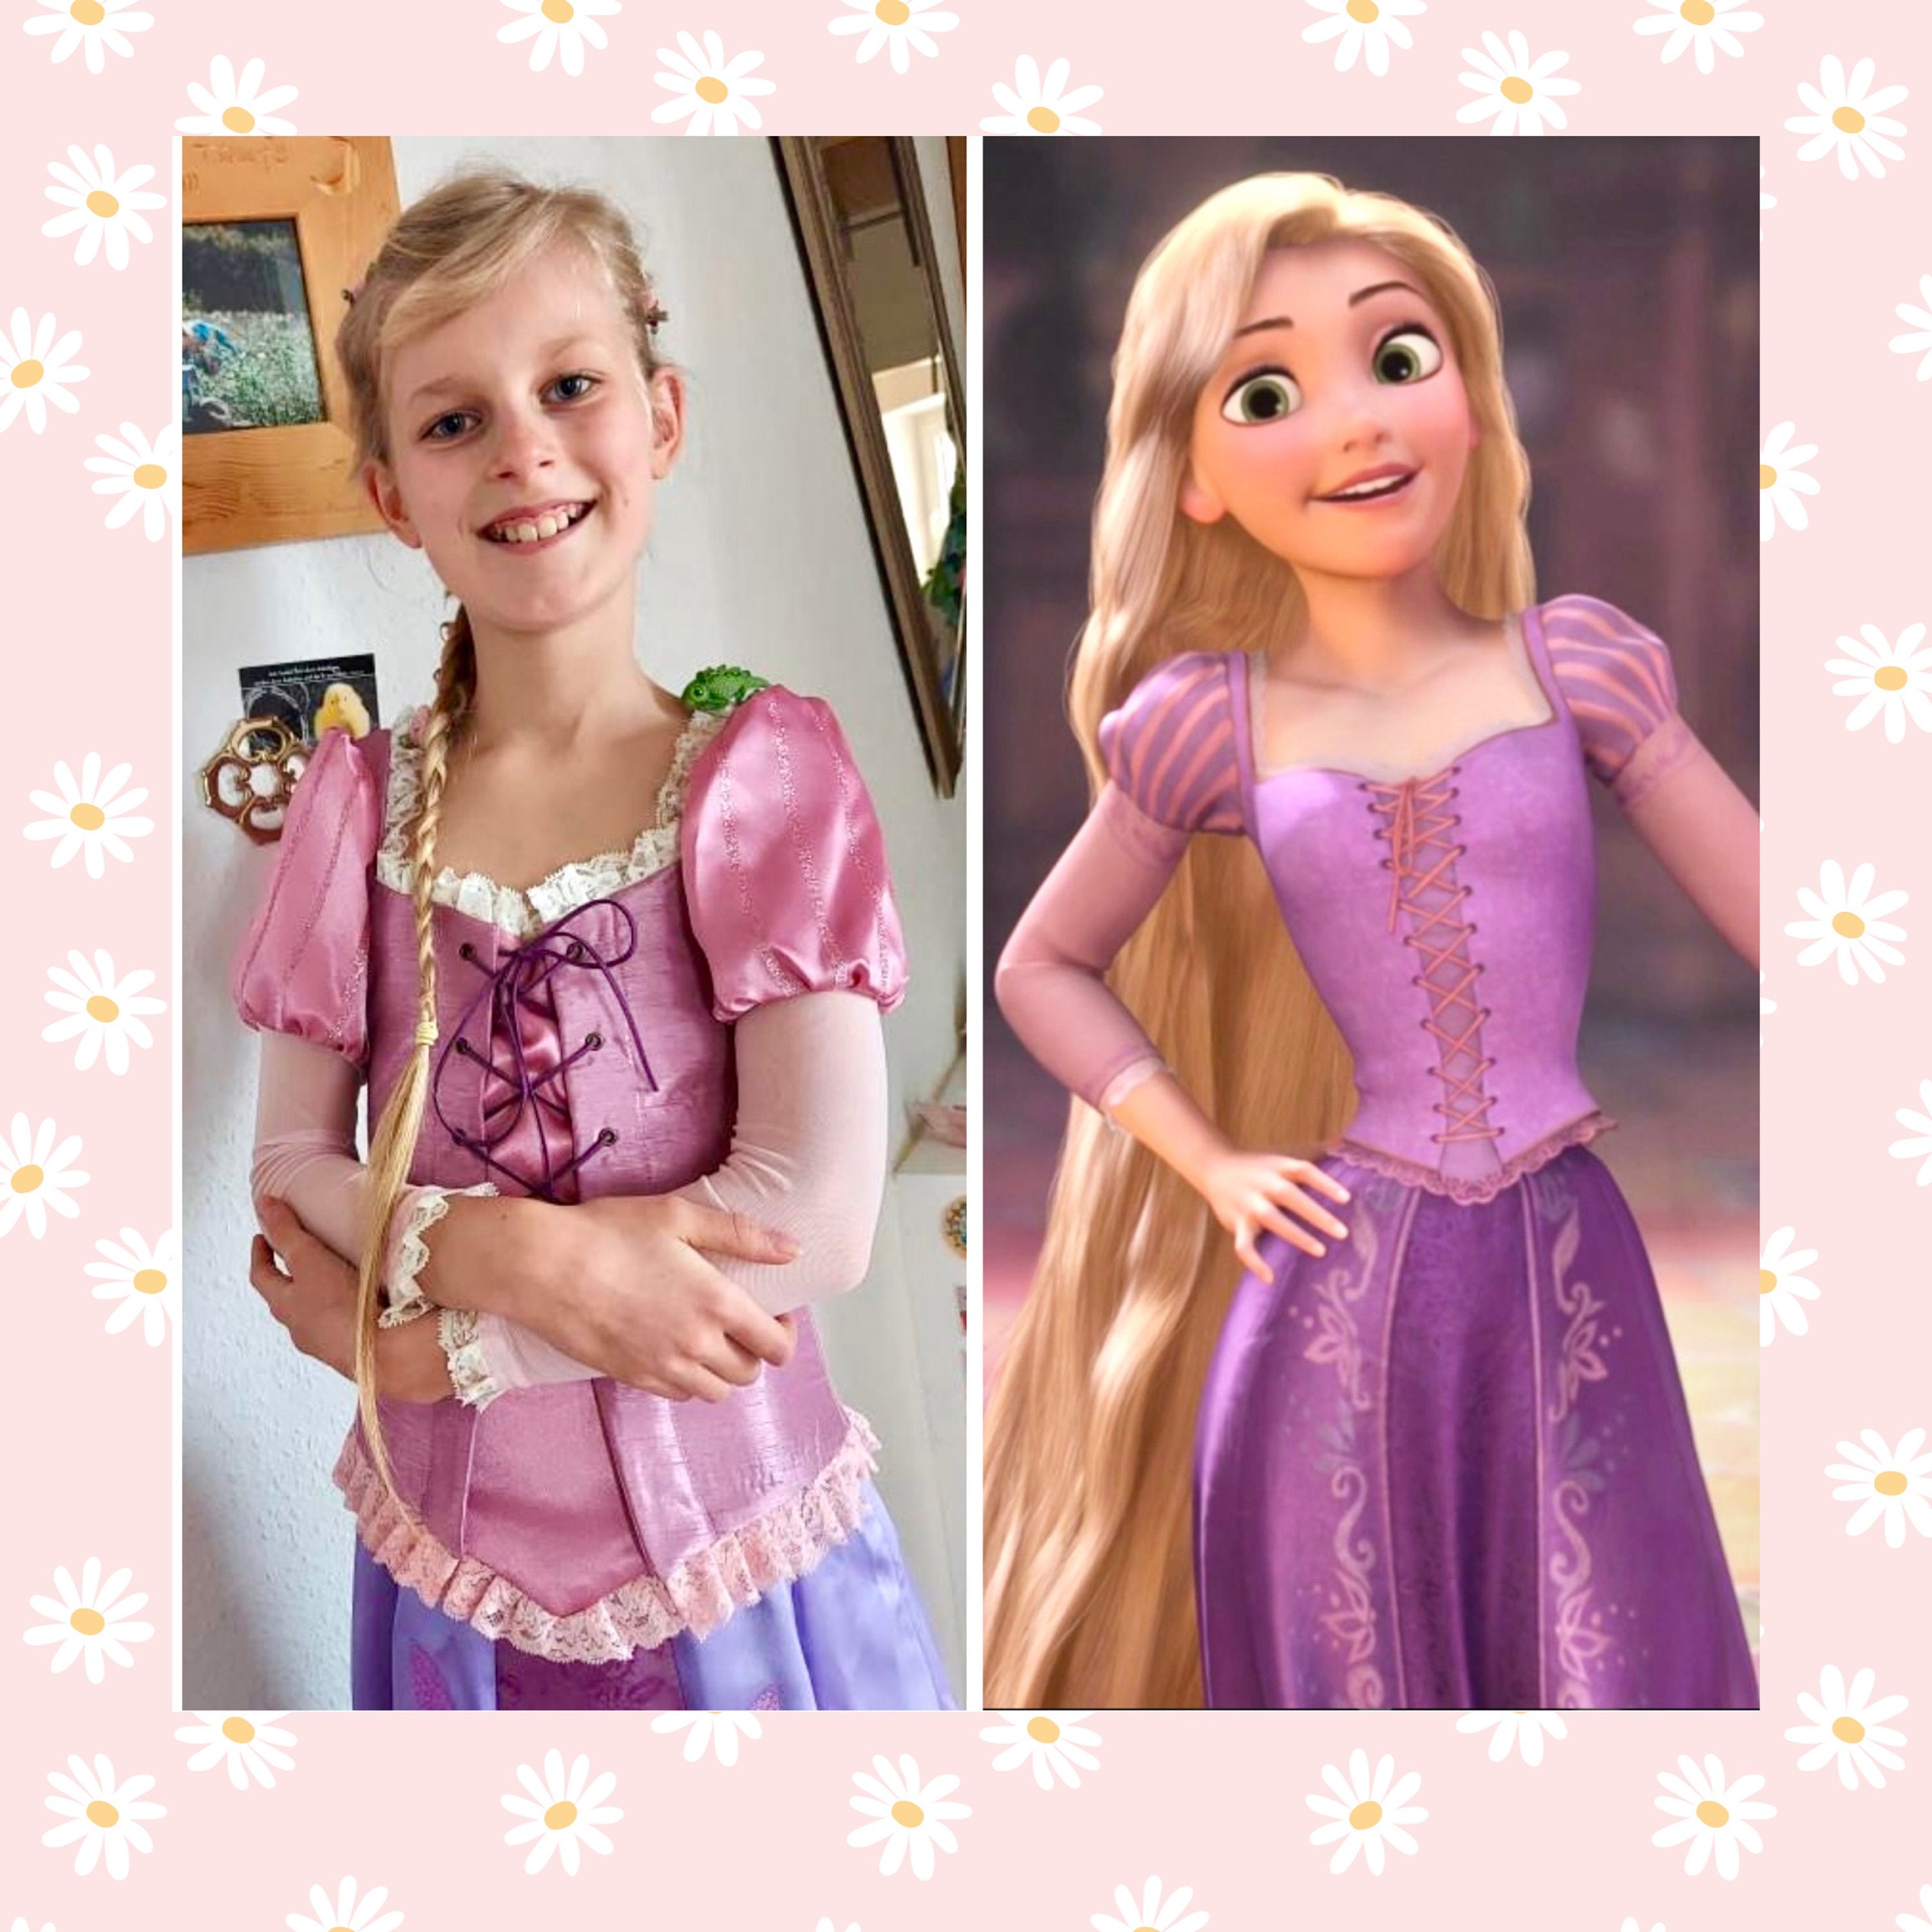 Disney filles Encanto Costume princesse Isabella robe charme pour